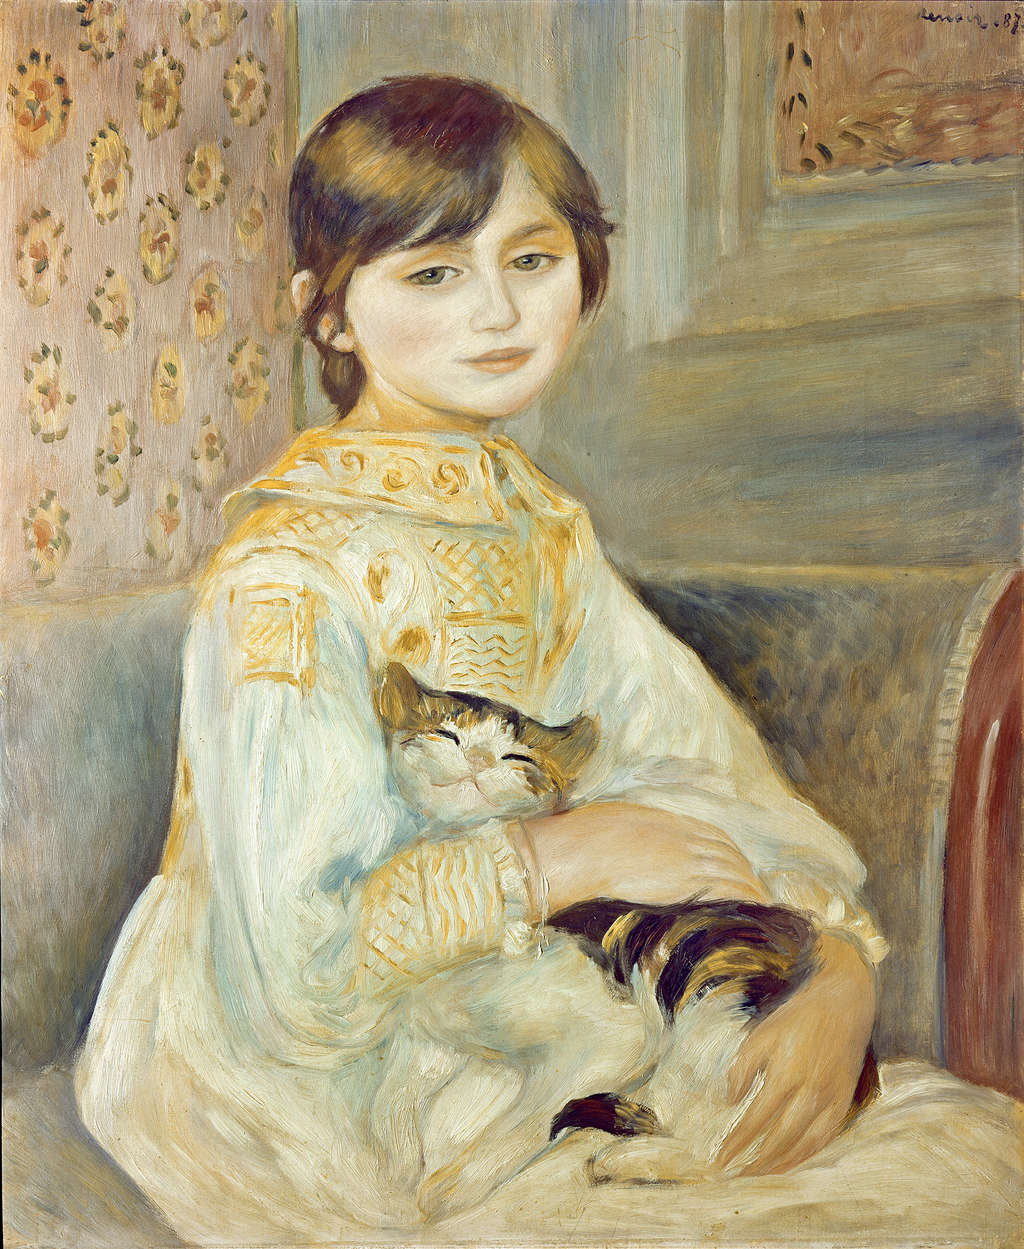             Fotomurali "Mademoiselle Julie con gatto" di Pierre Auguste Renoir
        